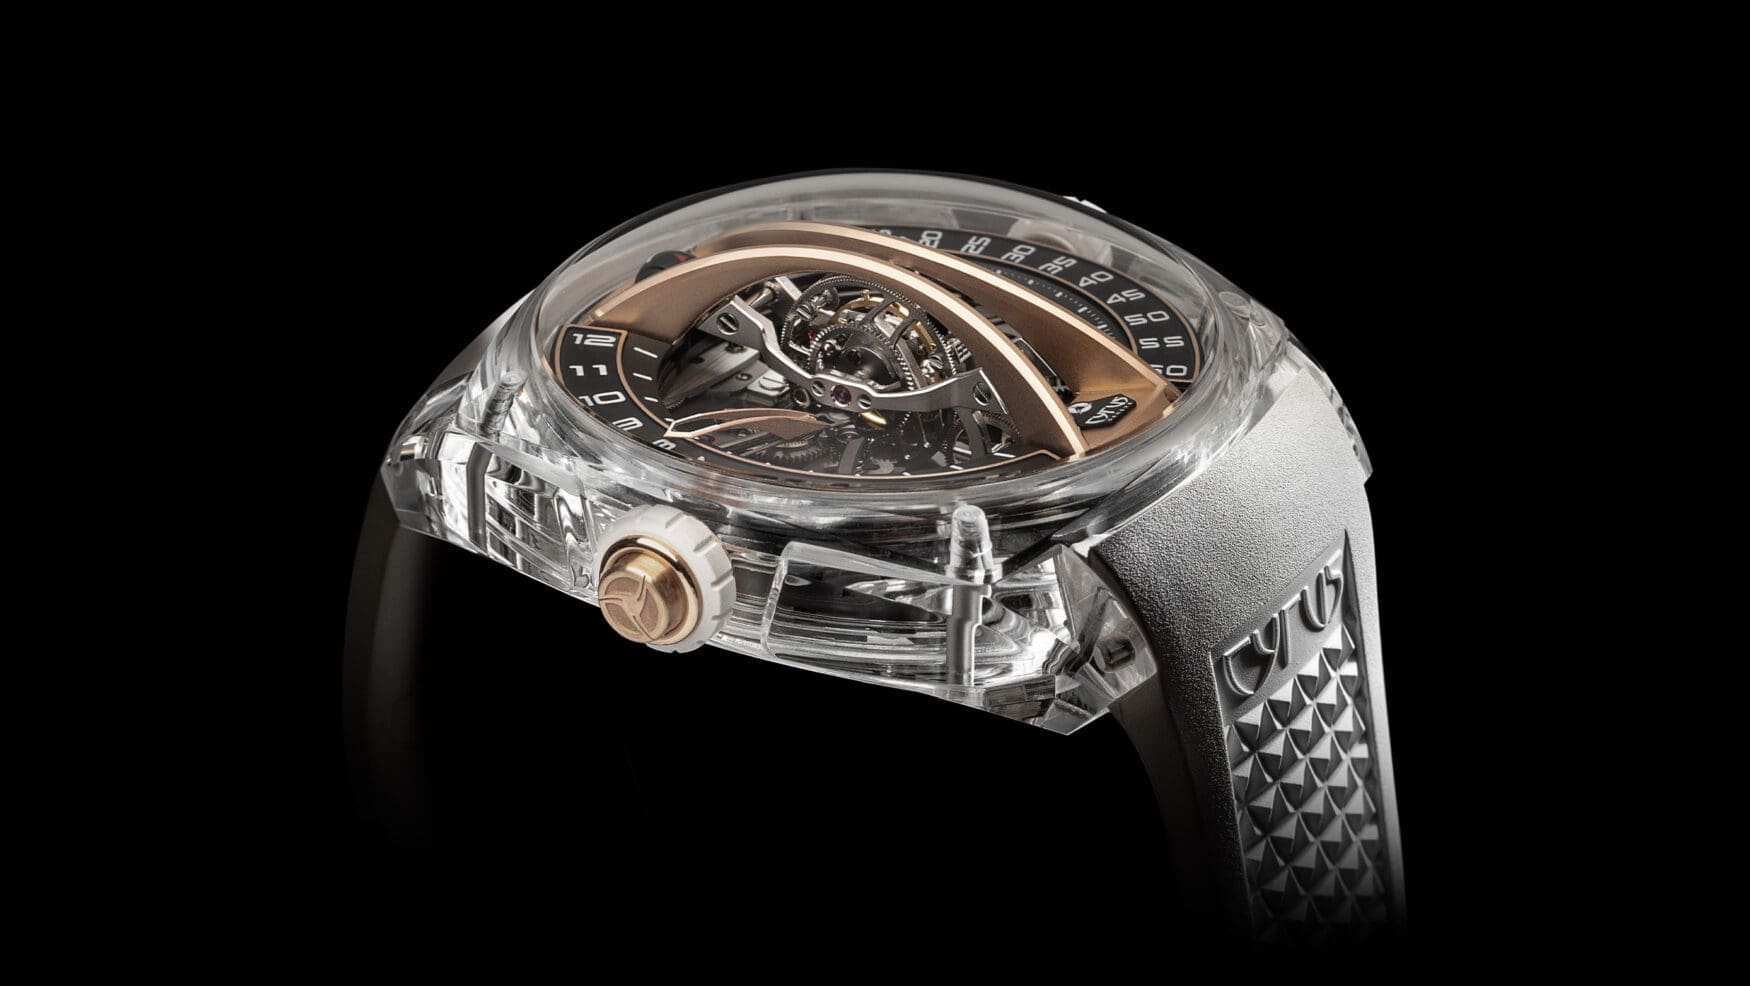 The Cyrus Klepcys Vertical Tourbillon Sapphire is a unique watch inspired by Leonardo Da Vinci